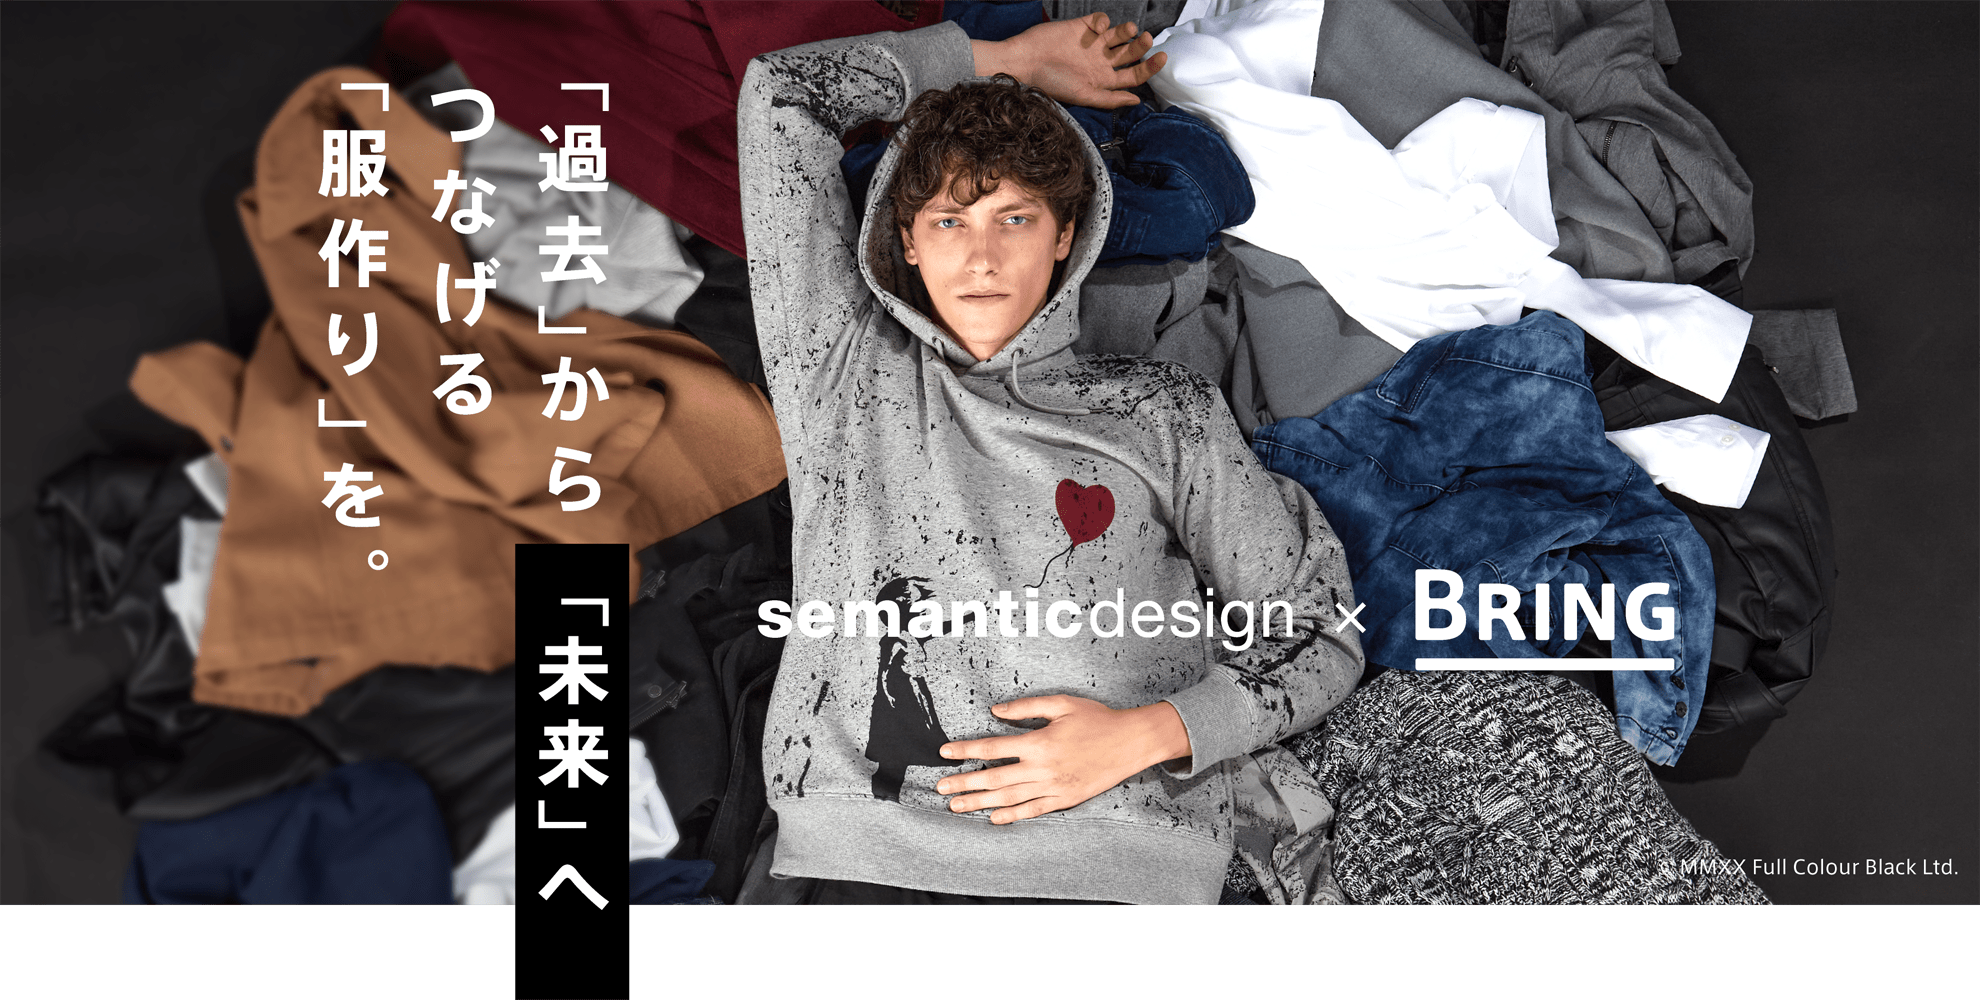 semanticdesign × BRING （セマンティックデザイン×ブリング）「過去」から「未来」へつなげる「服作り」を